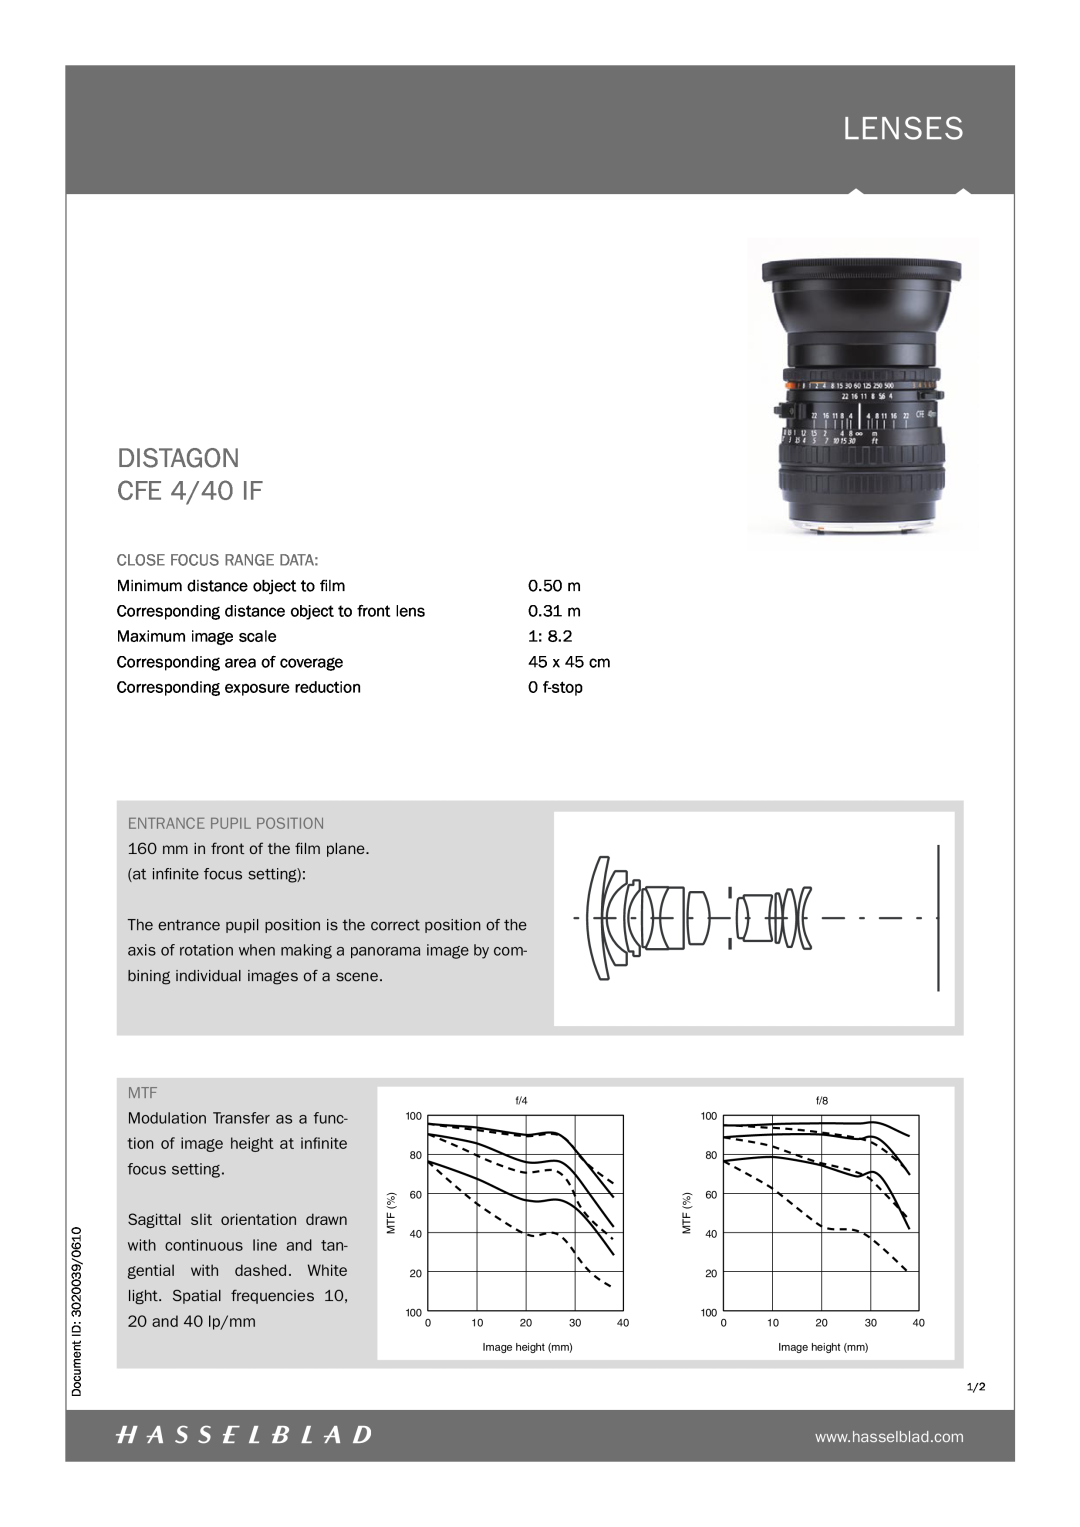 Hasselblad manual Lenses, DISTAGON CFE 4/40 IF, Close Focus Range Data, Entrance Pupil Position 